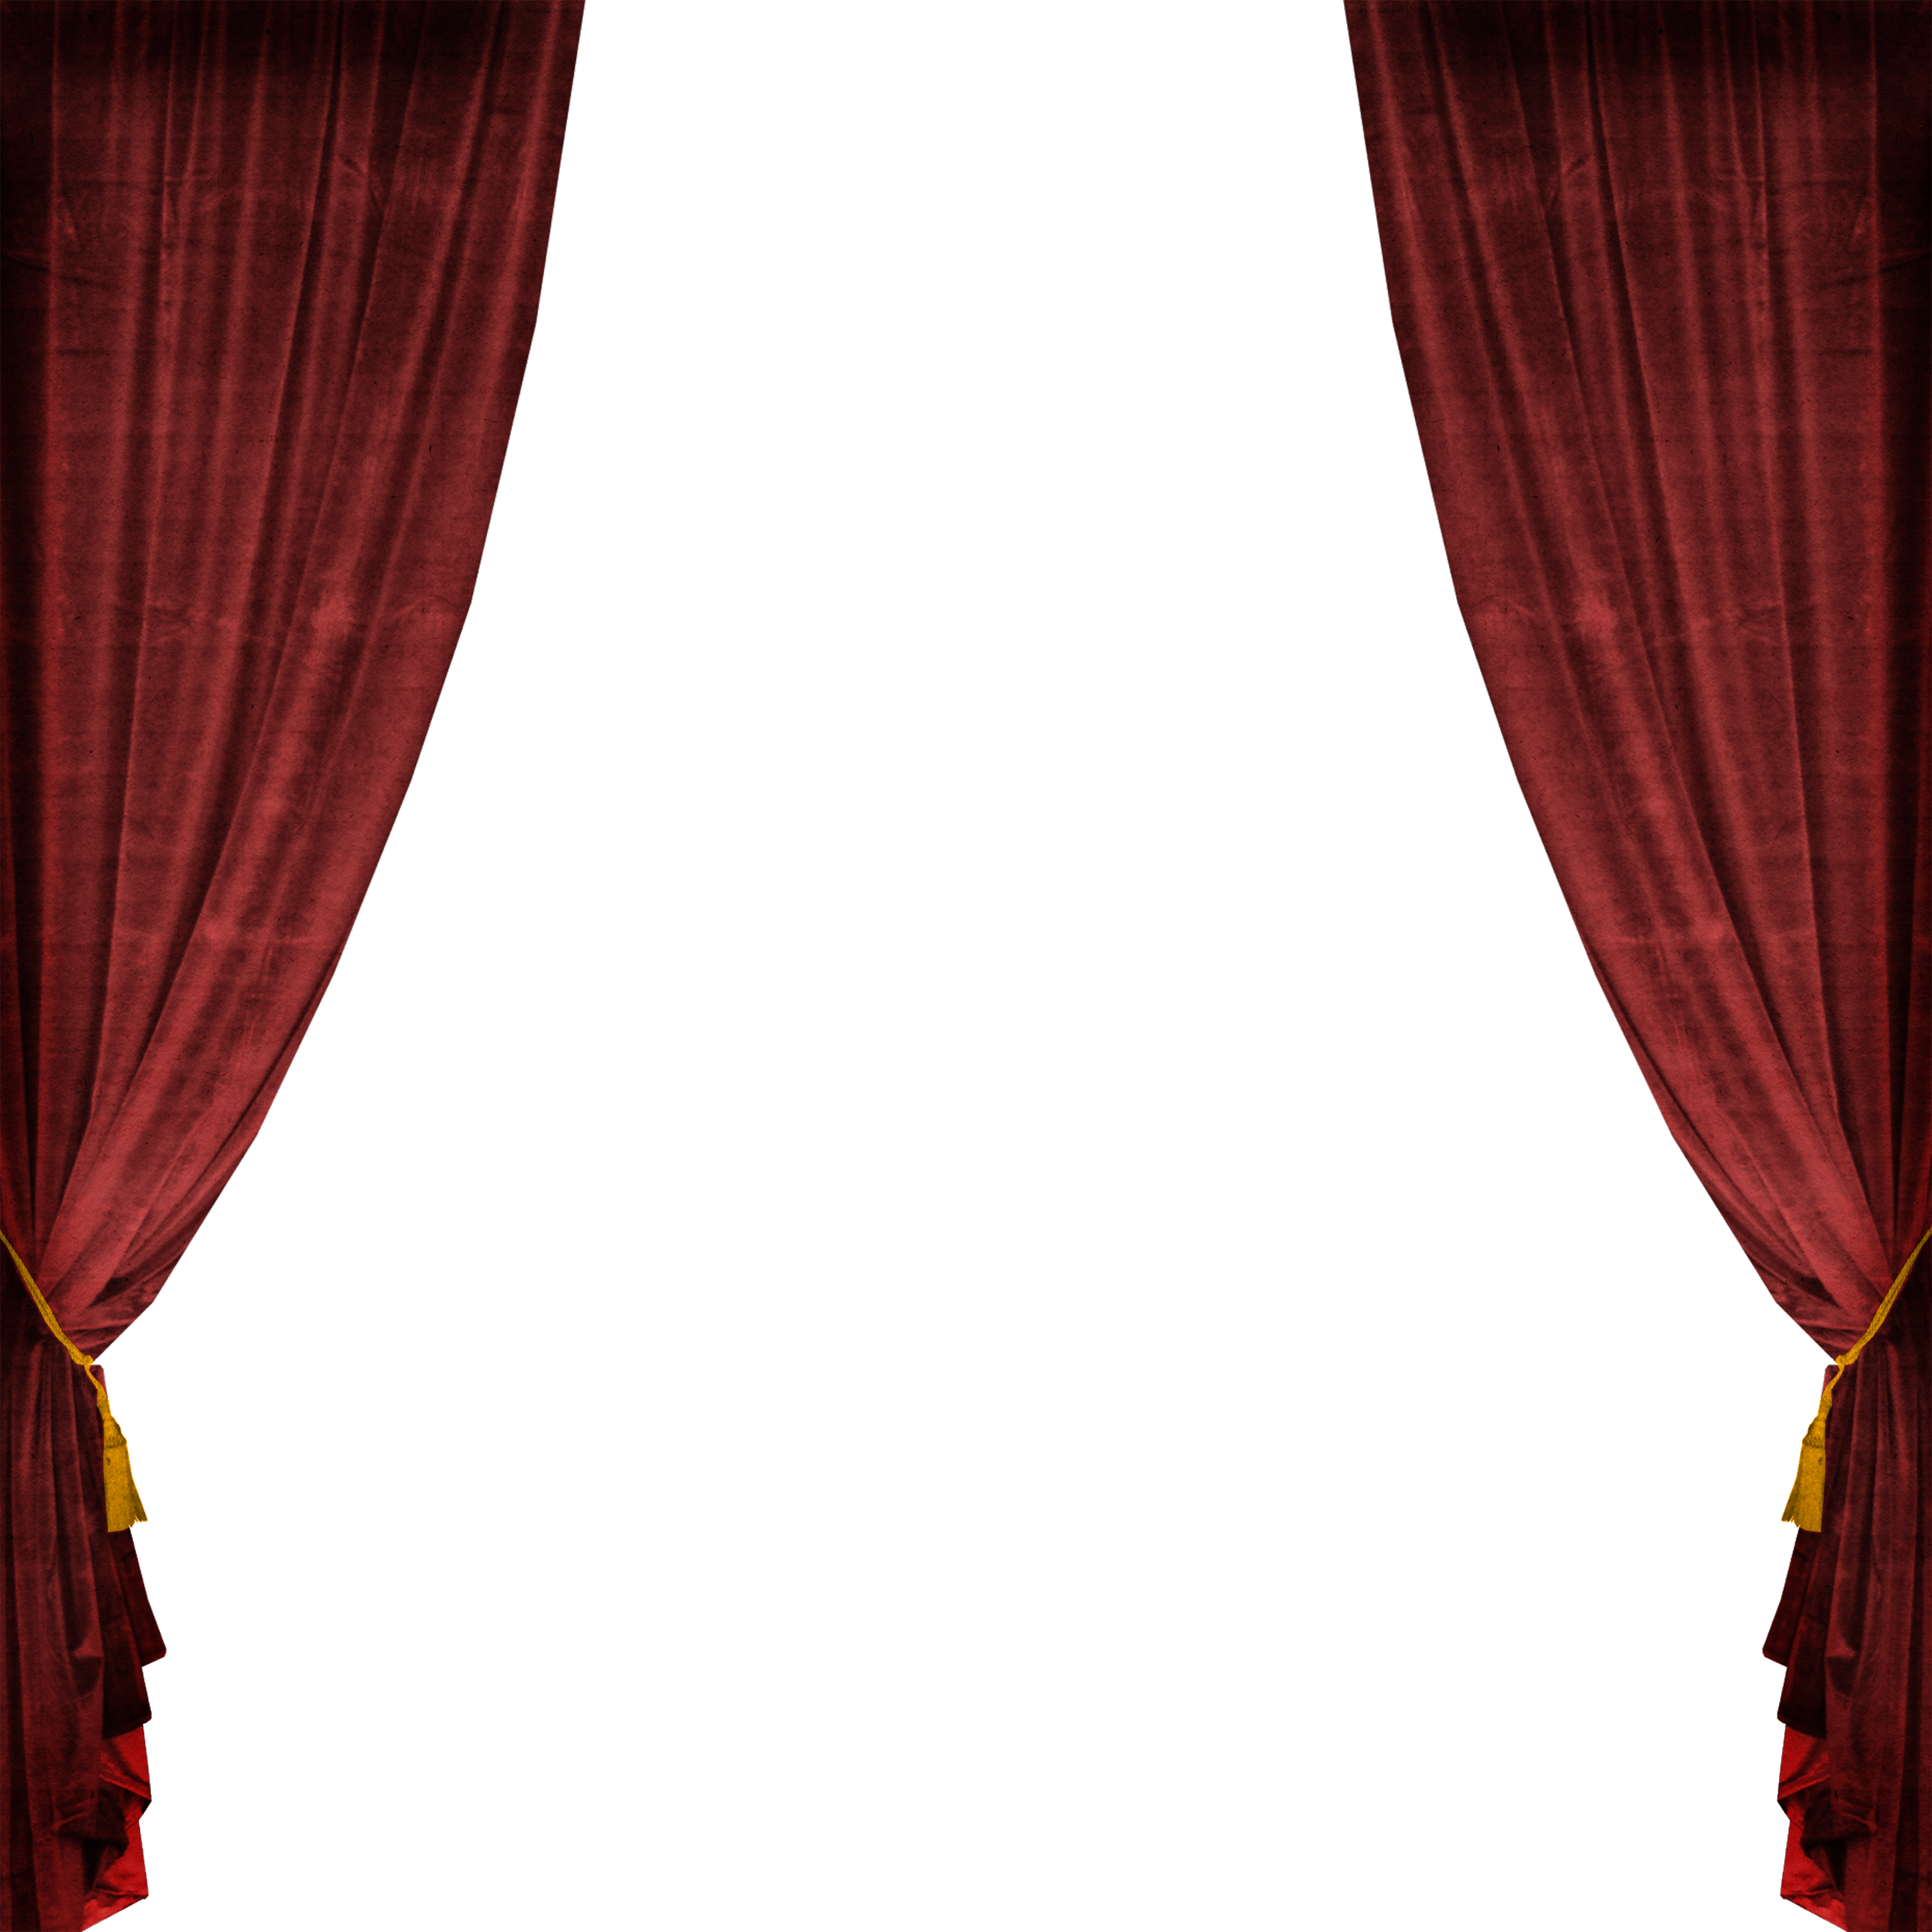 curtains clipart transparent background